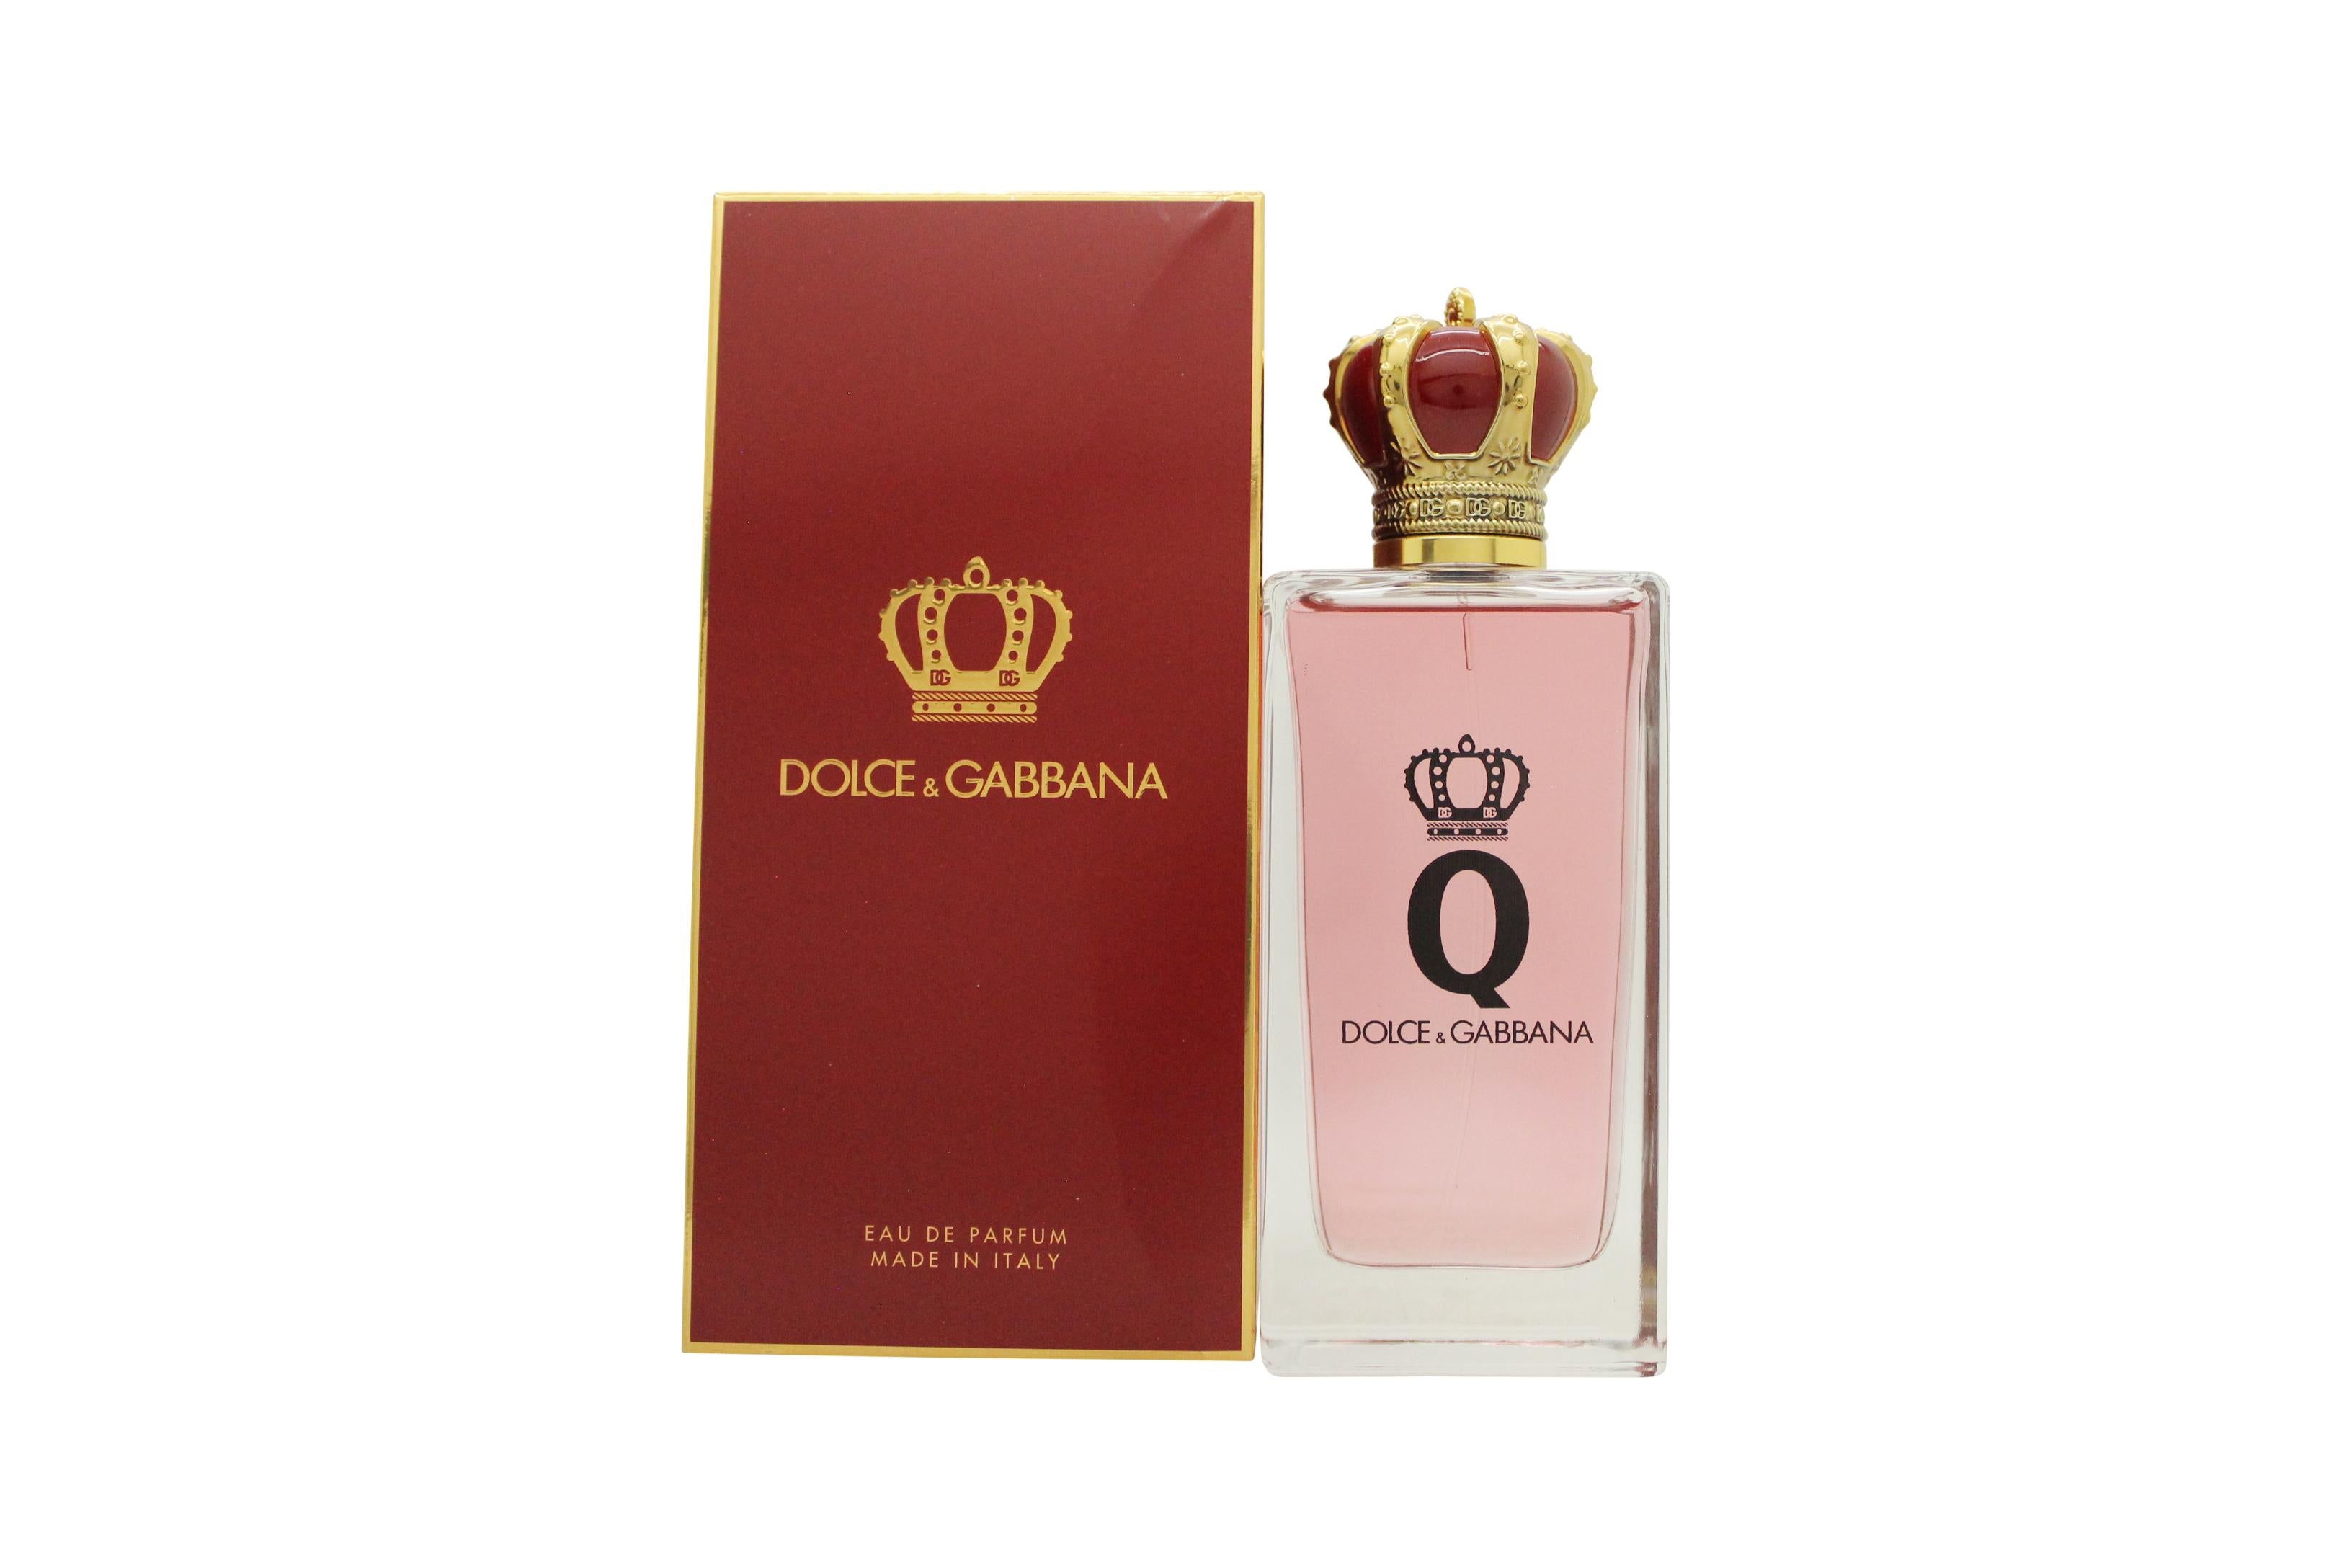 View Dolce Gabbana Q Eau de Parfum 100ml Spray information